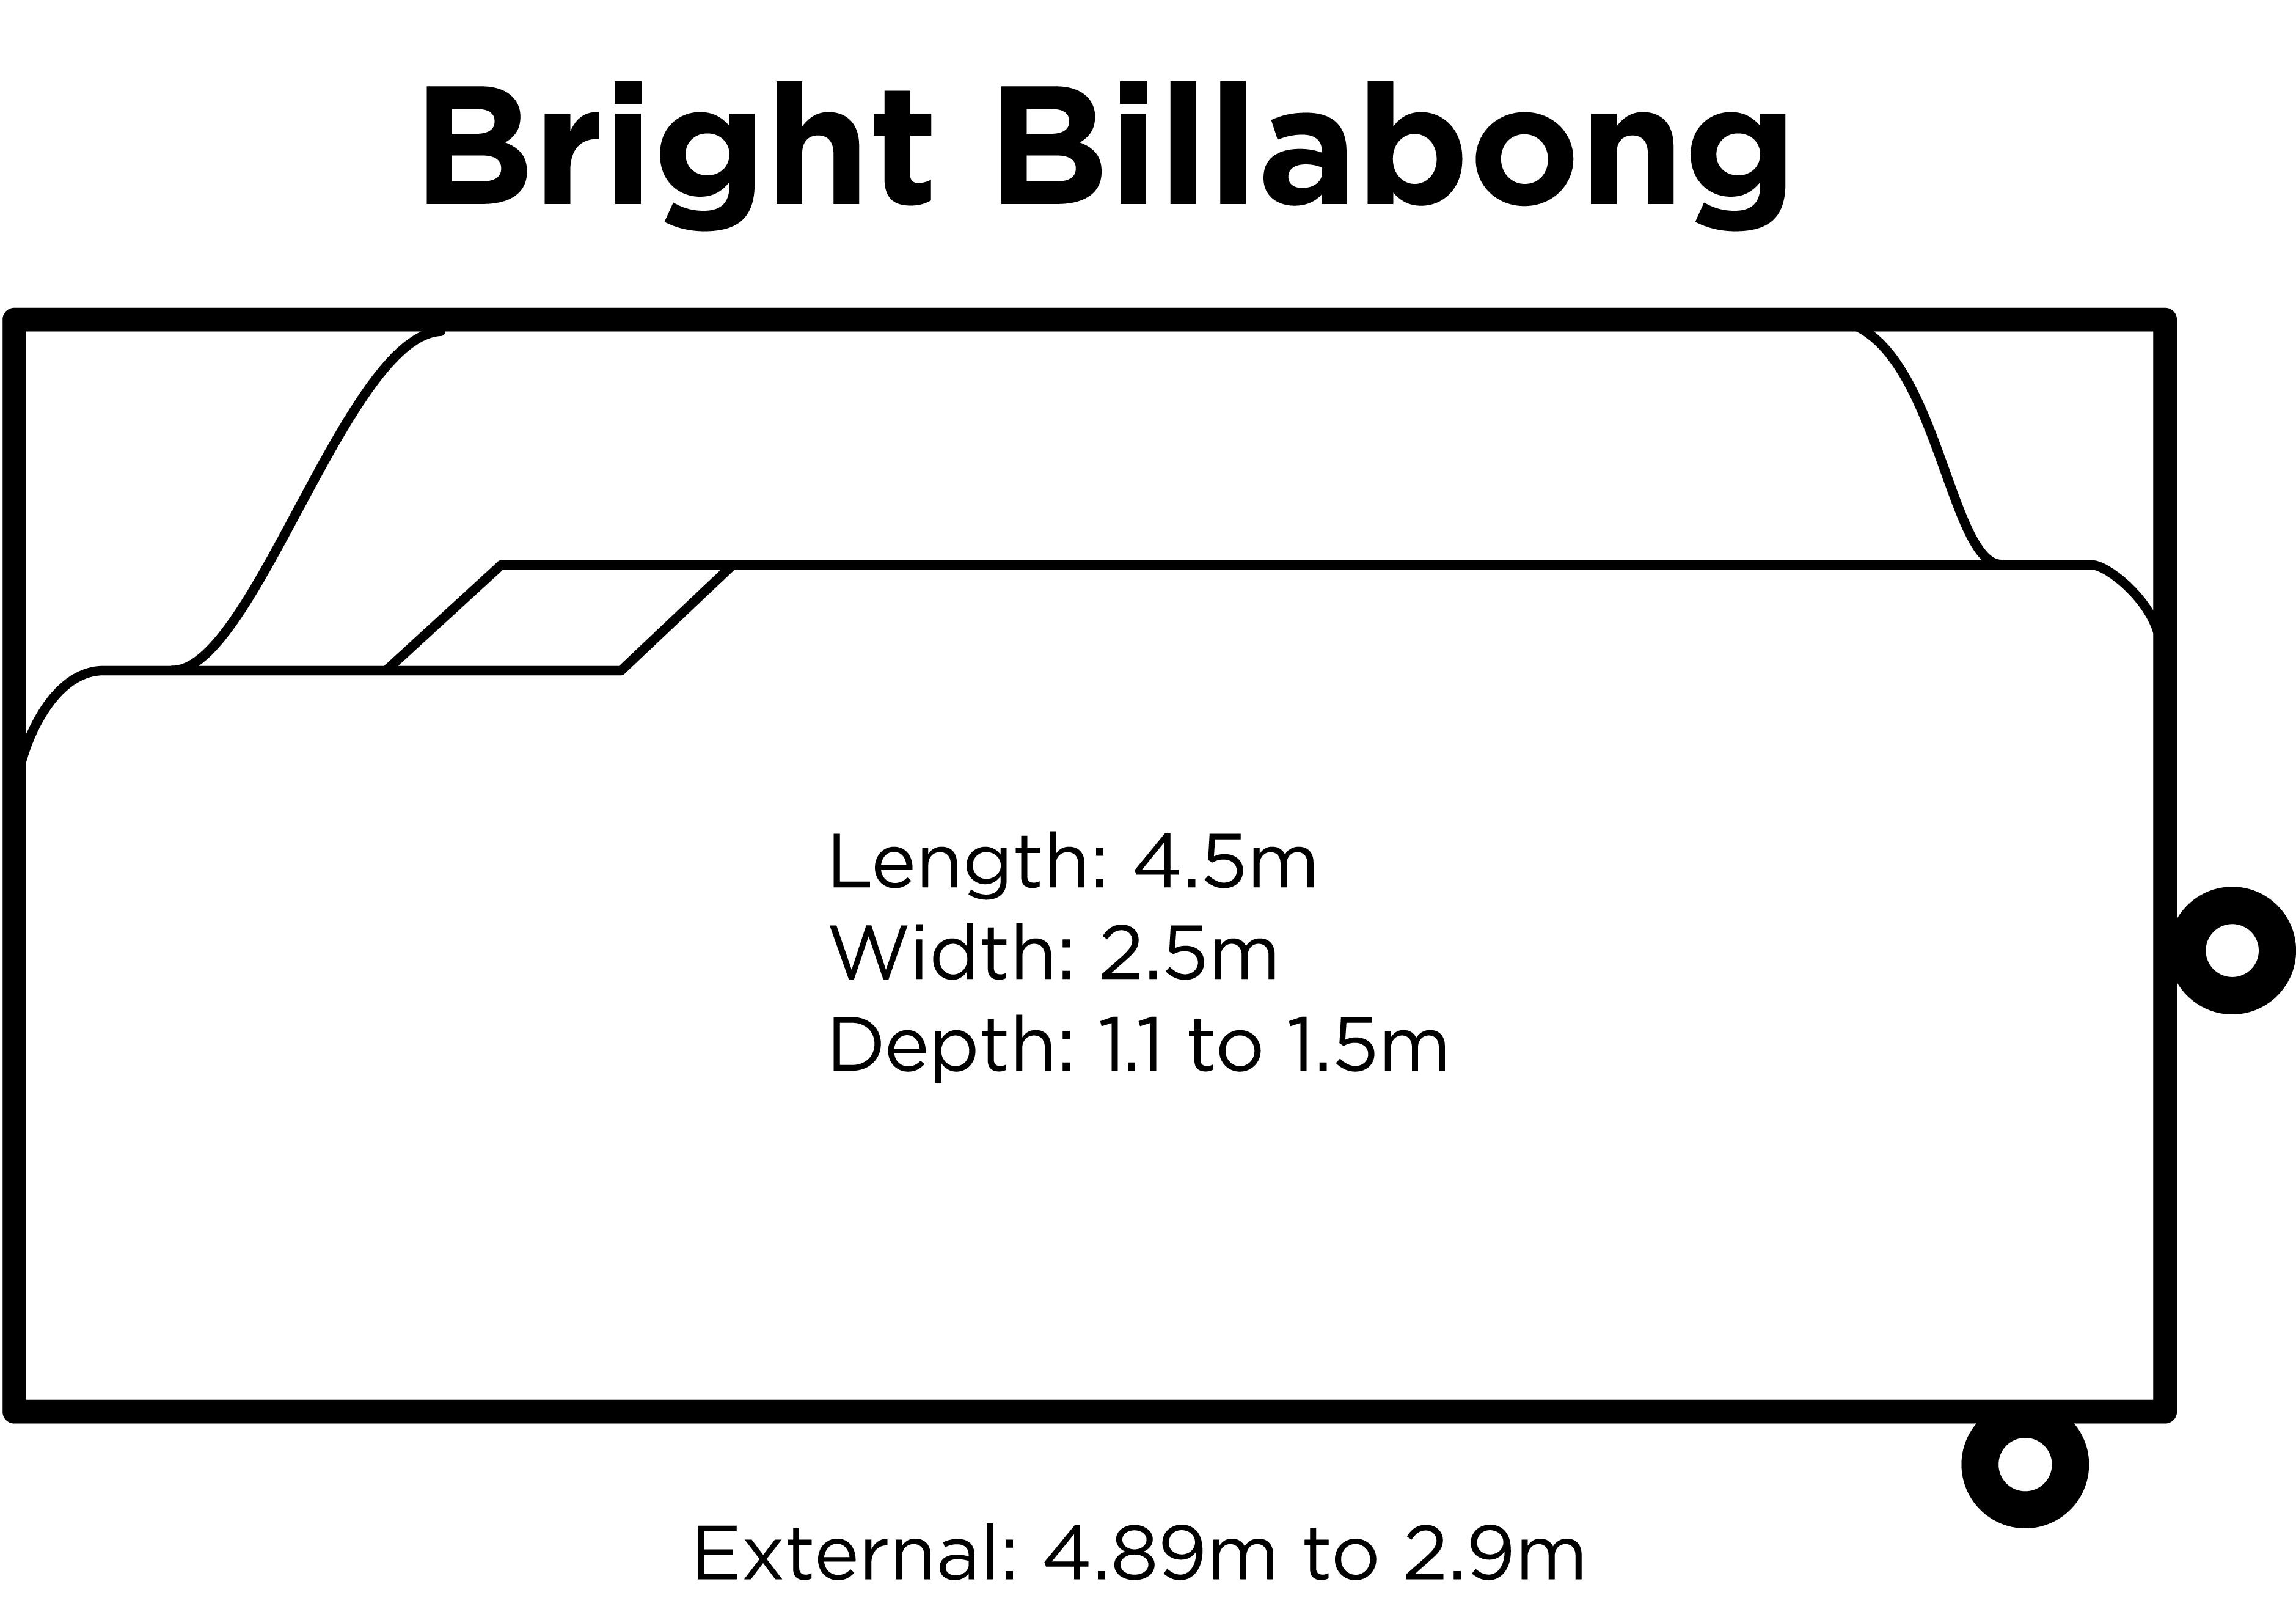 Bright Billabong